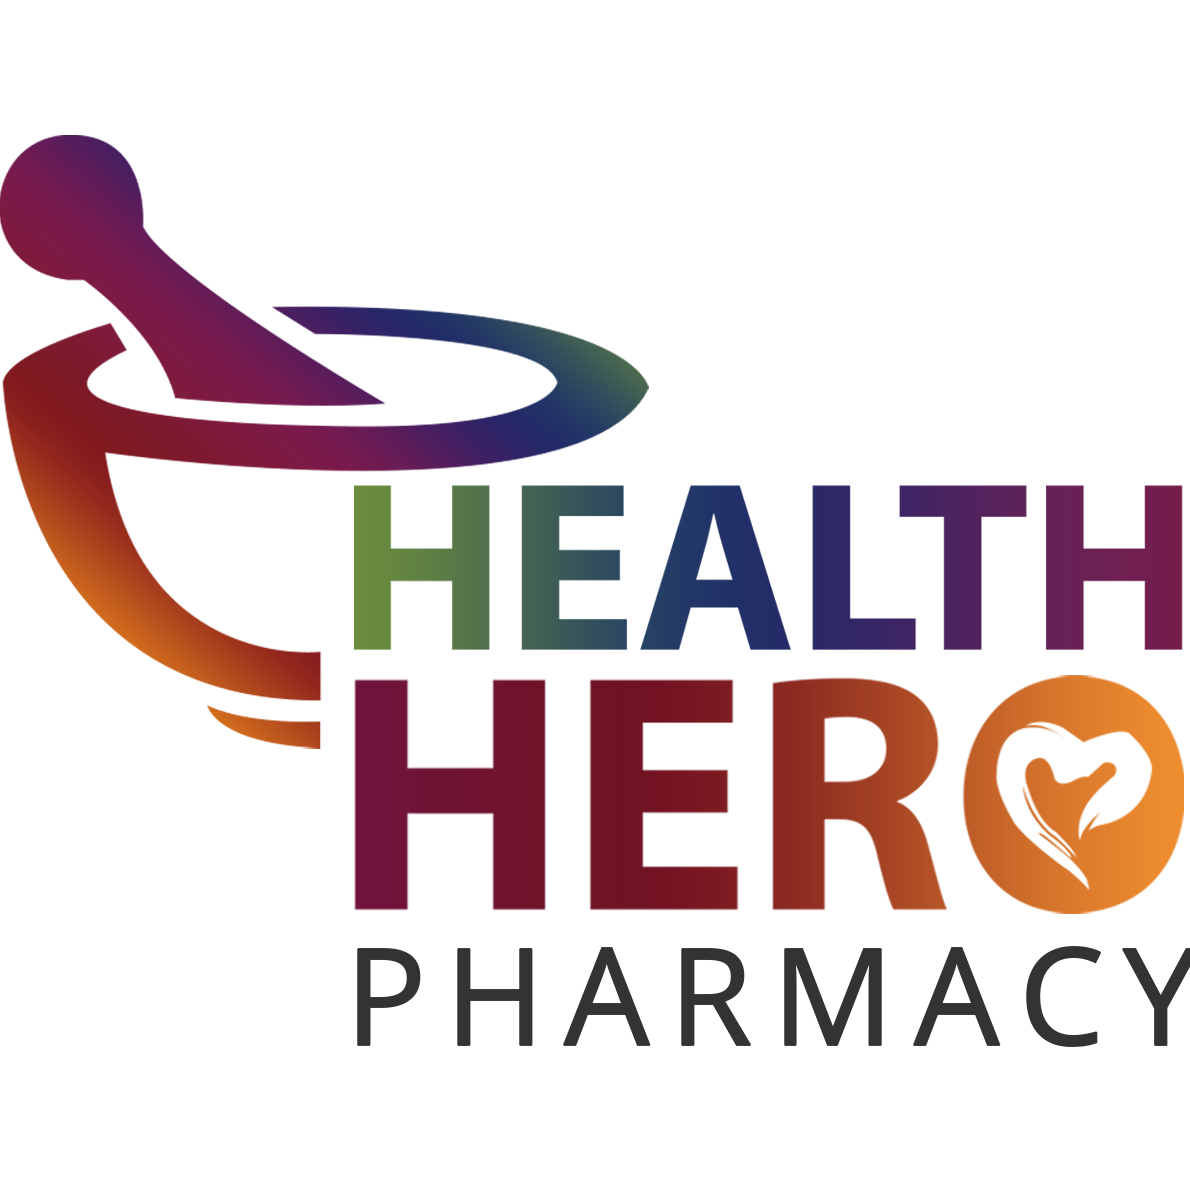 Health Hero Pharmacy- The Unasource Building